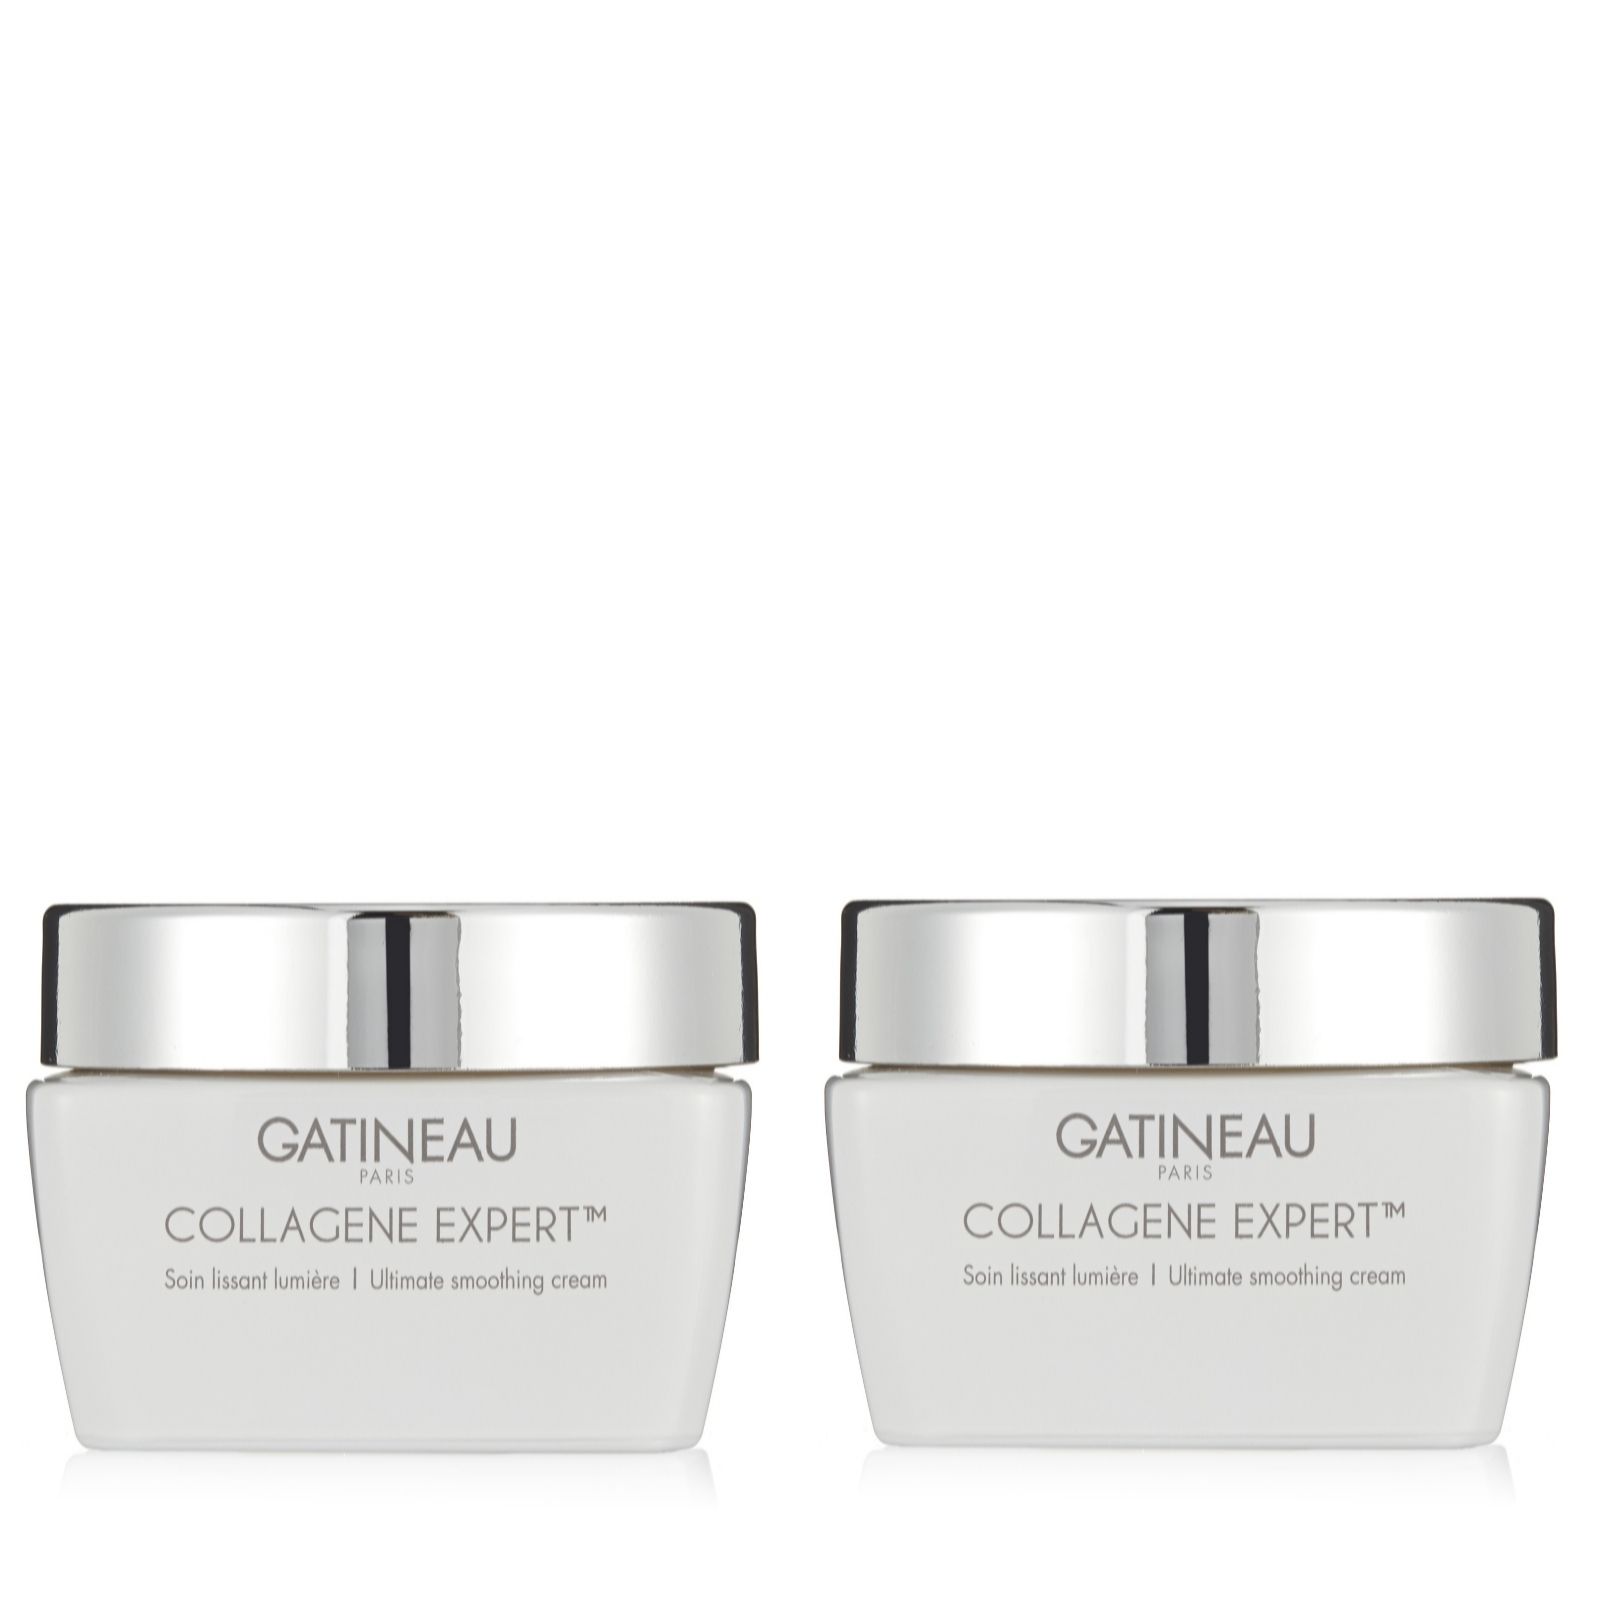 Gatineau Collagene Expert Ultimate Smoothing Cream 50ml Duo